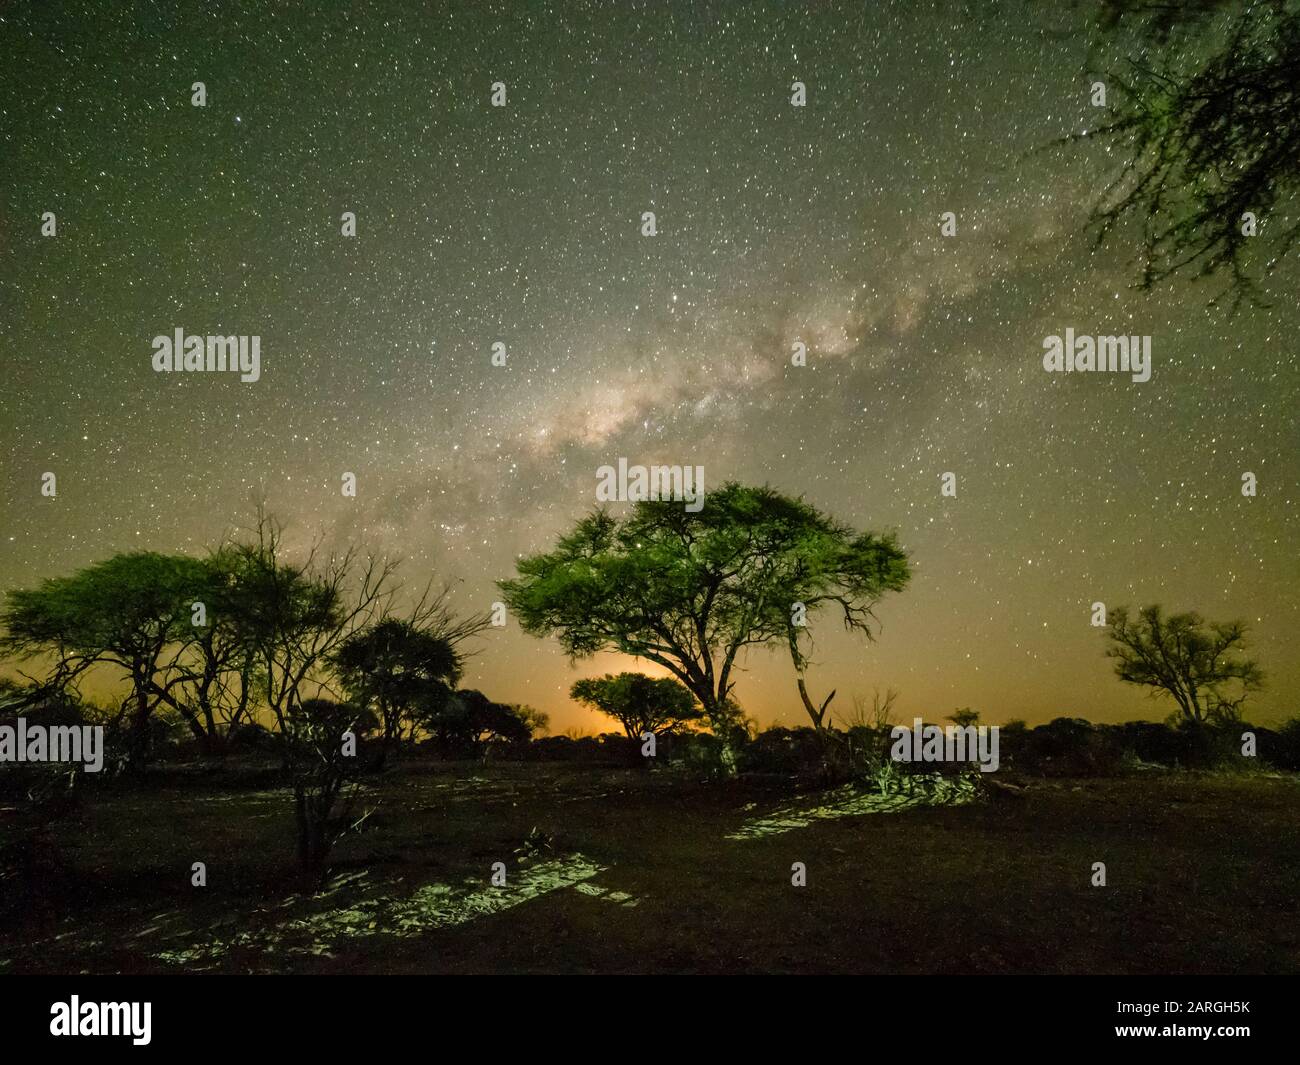 The milky way over acacia trees at night in the Okavango Delta, Botswana, Africa Stock Photo